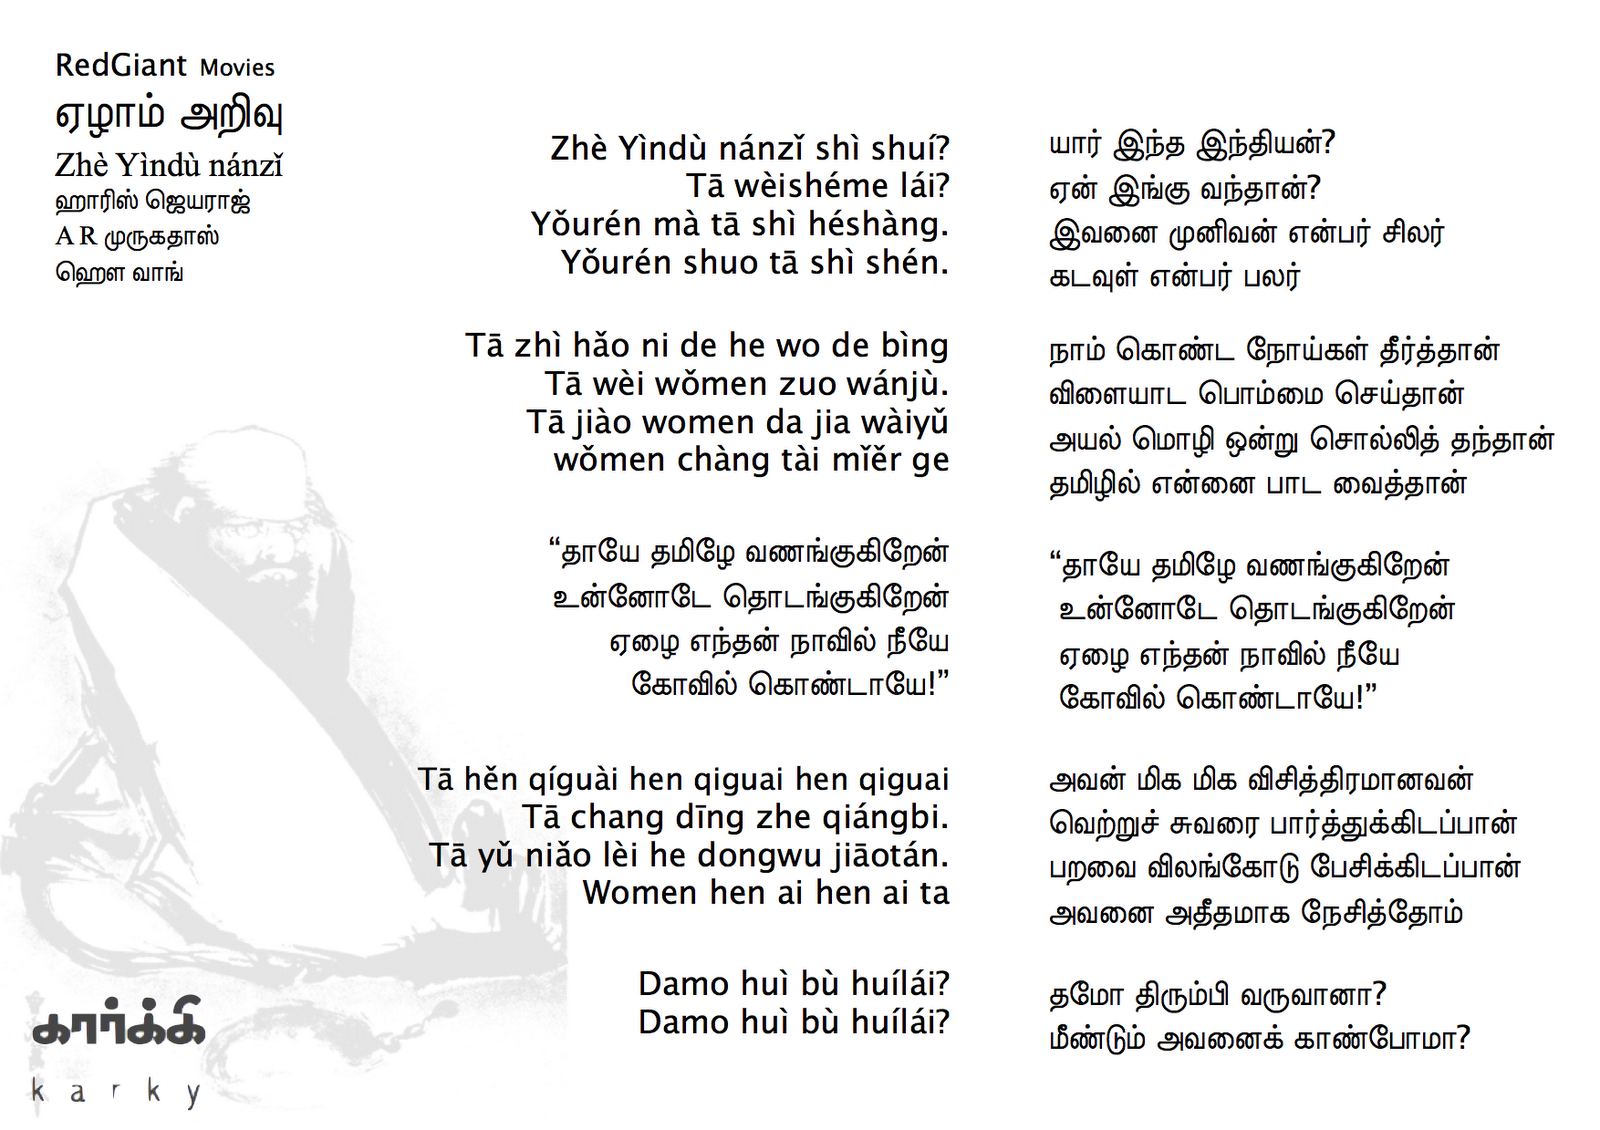 Mai potta kannala song lyrics in tamil